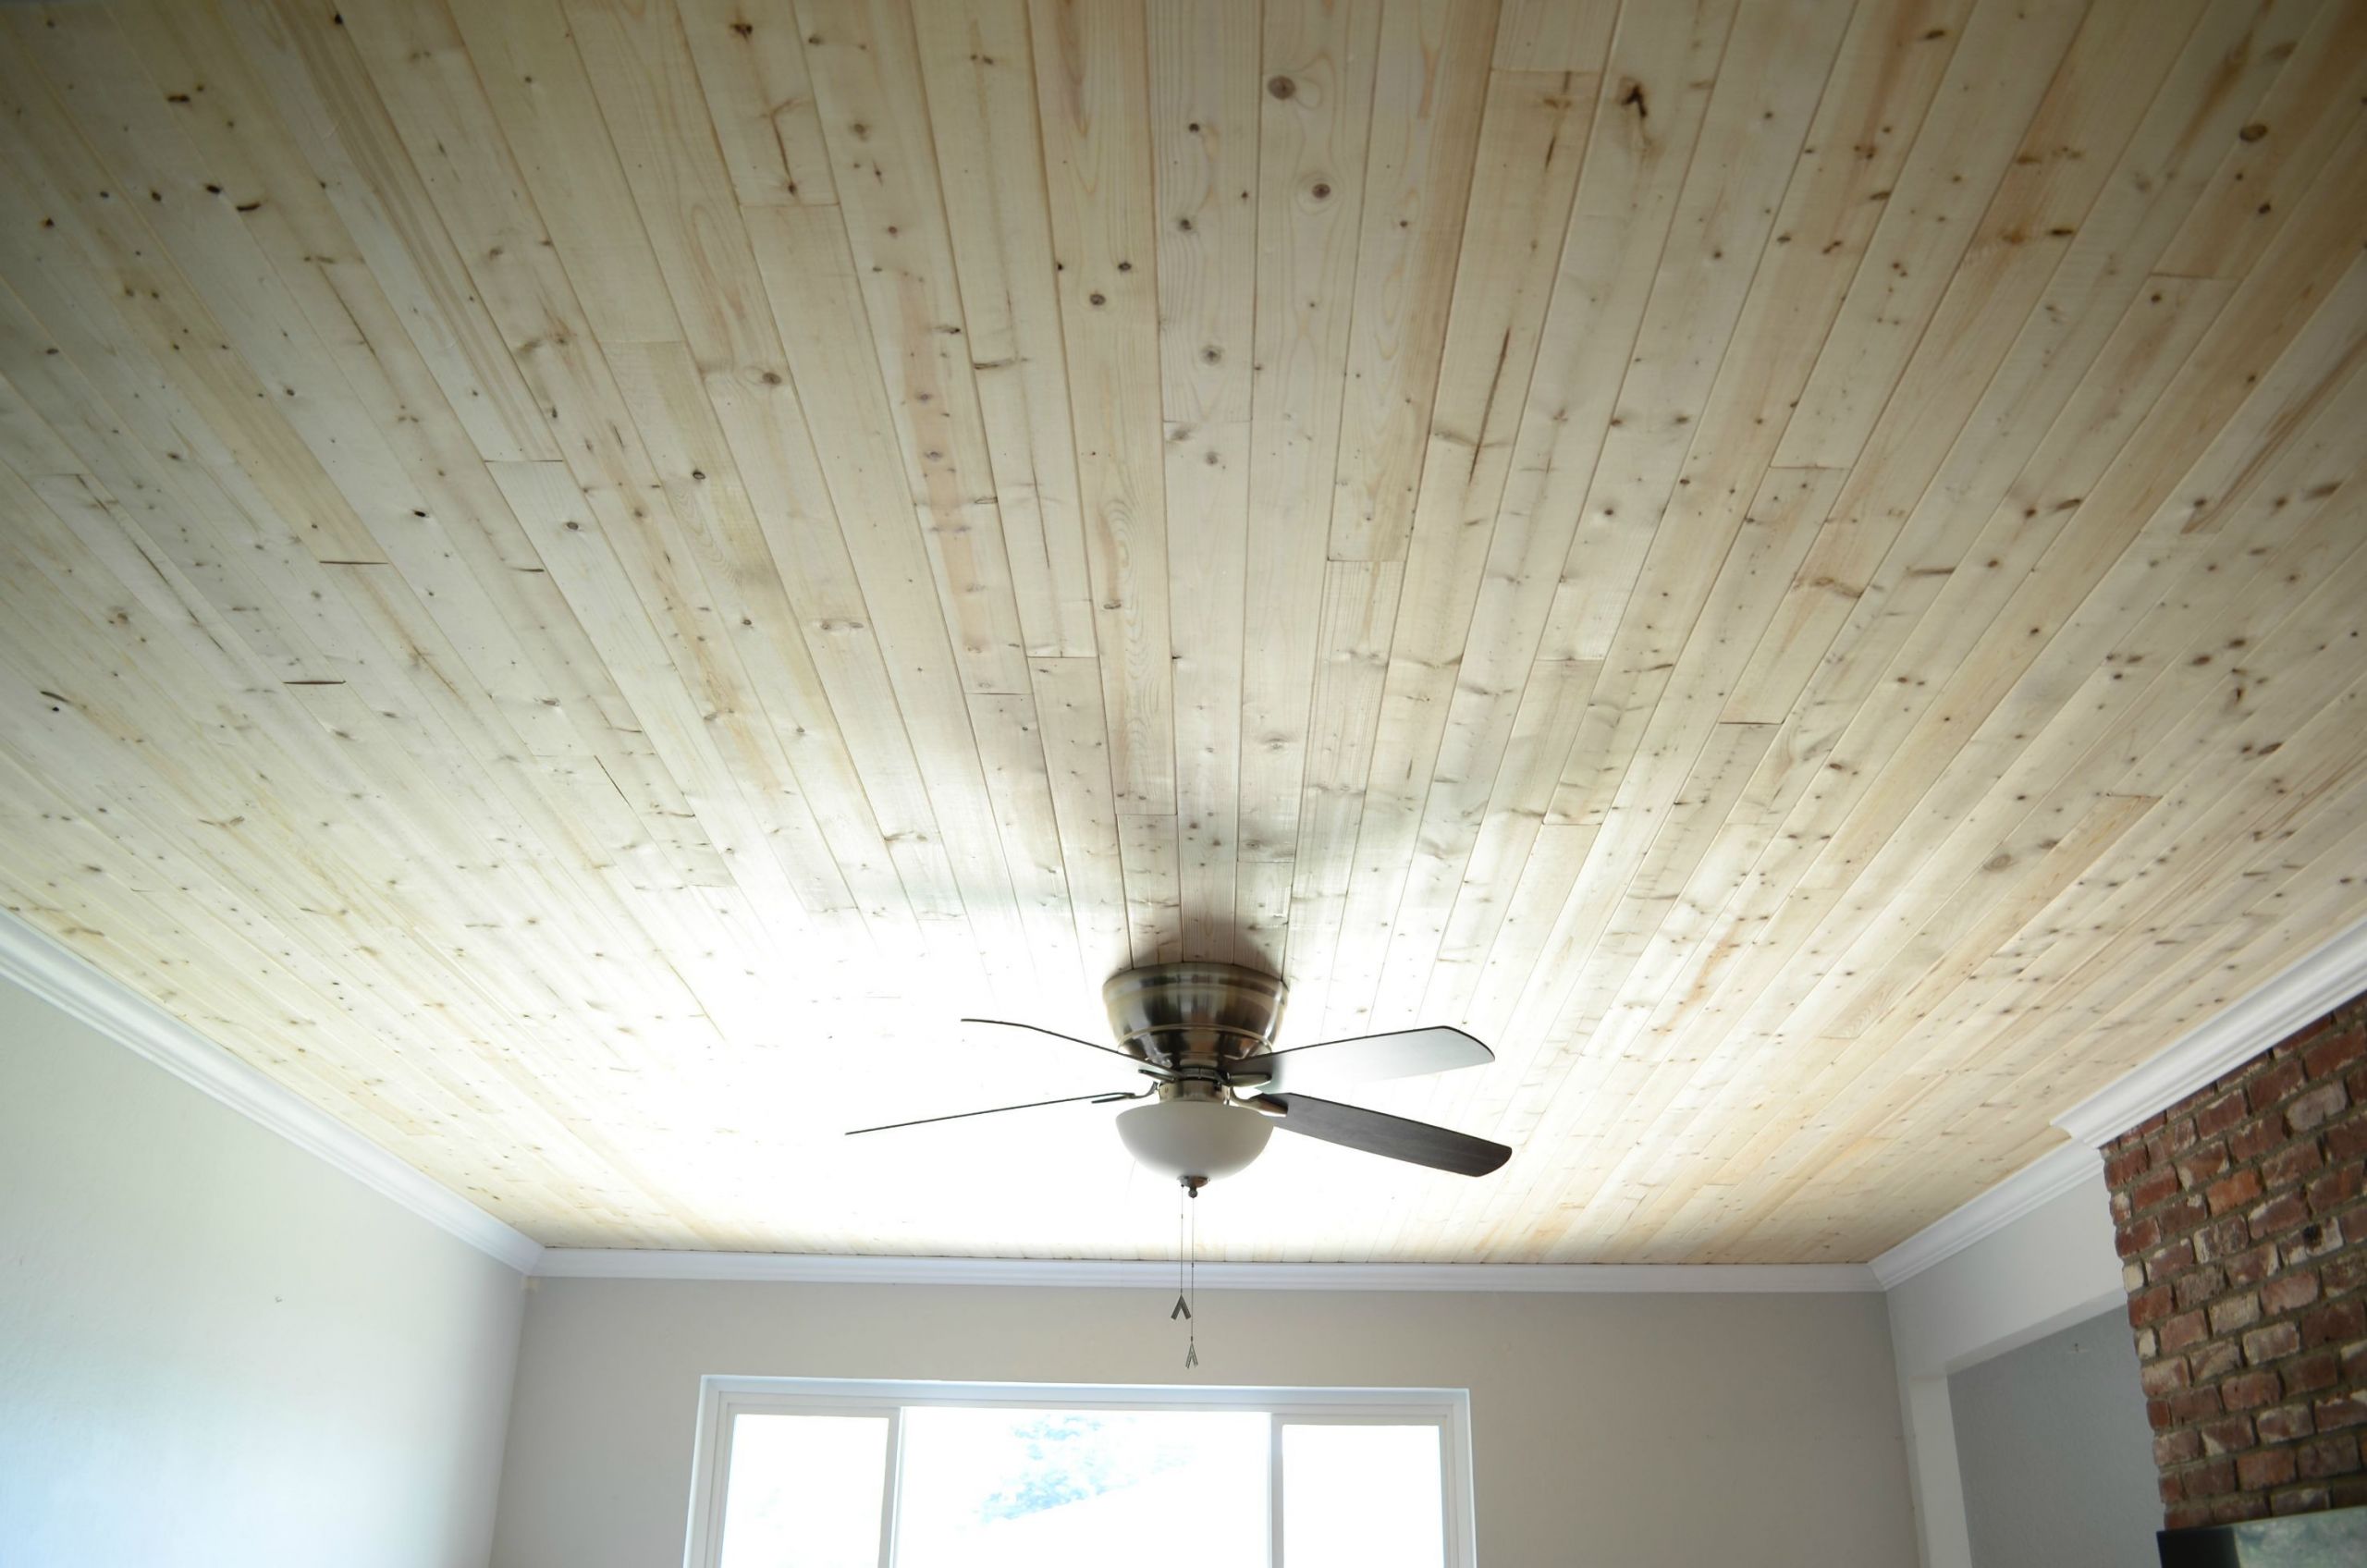 Plank Ceiling DIY
 Plank ceiling over popcorn ceiling DIY